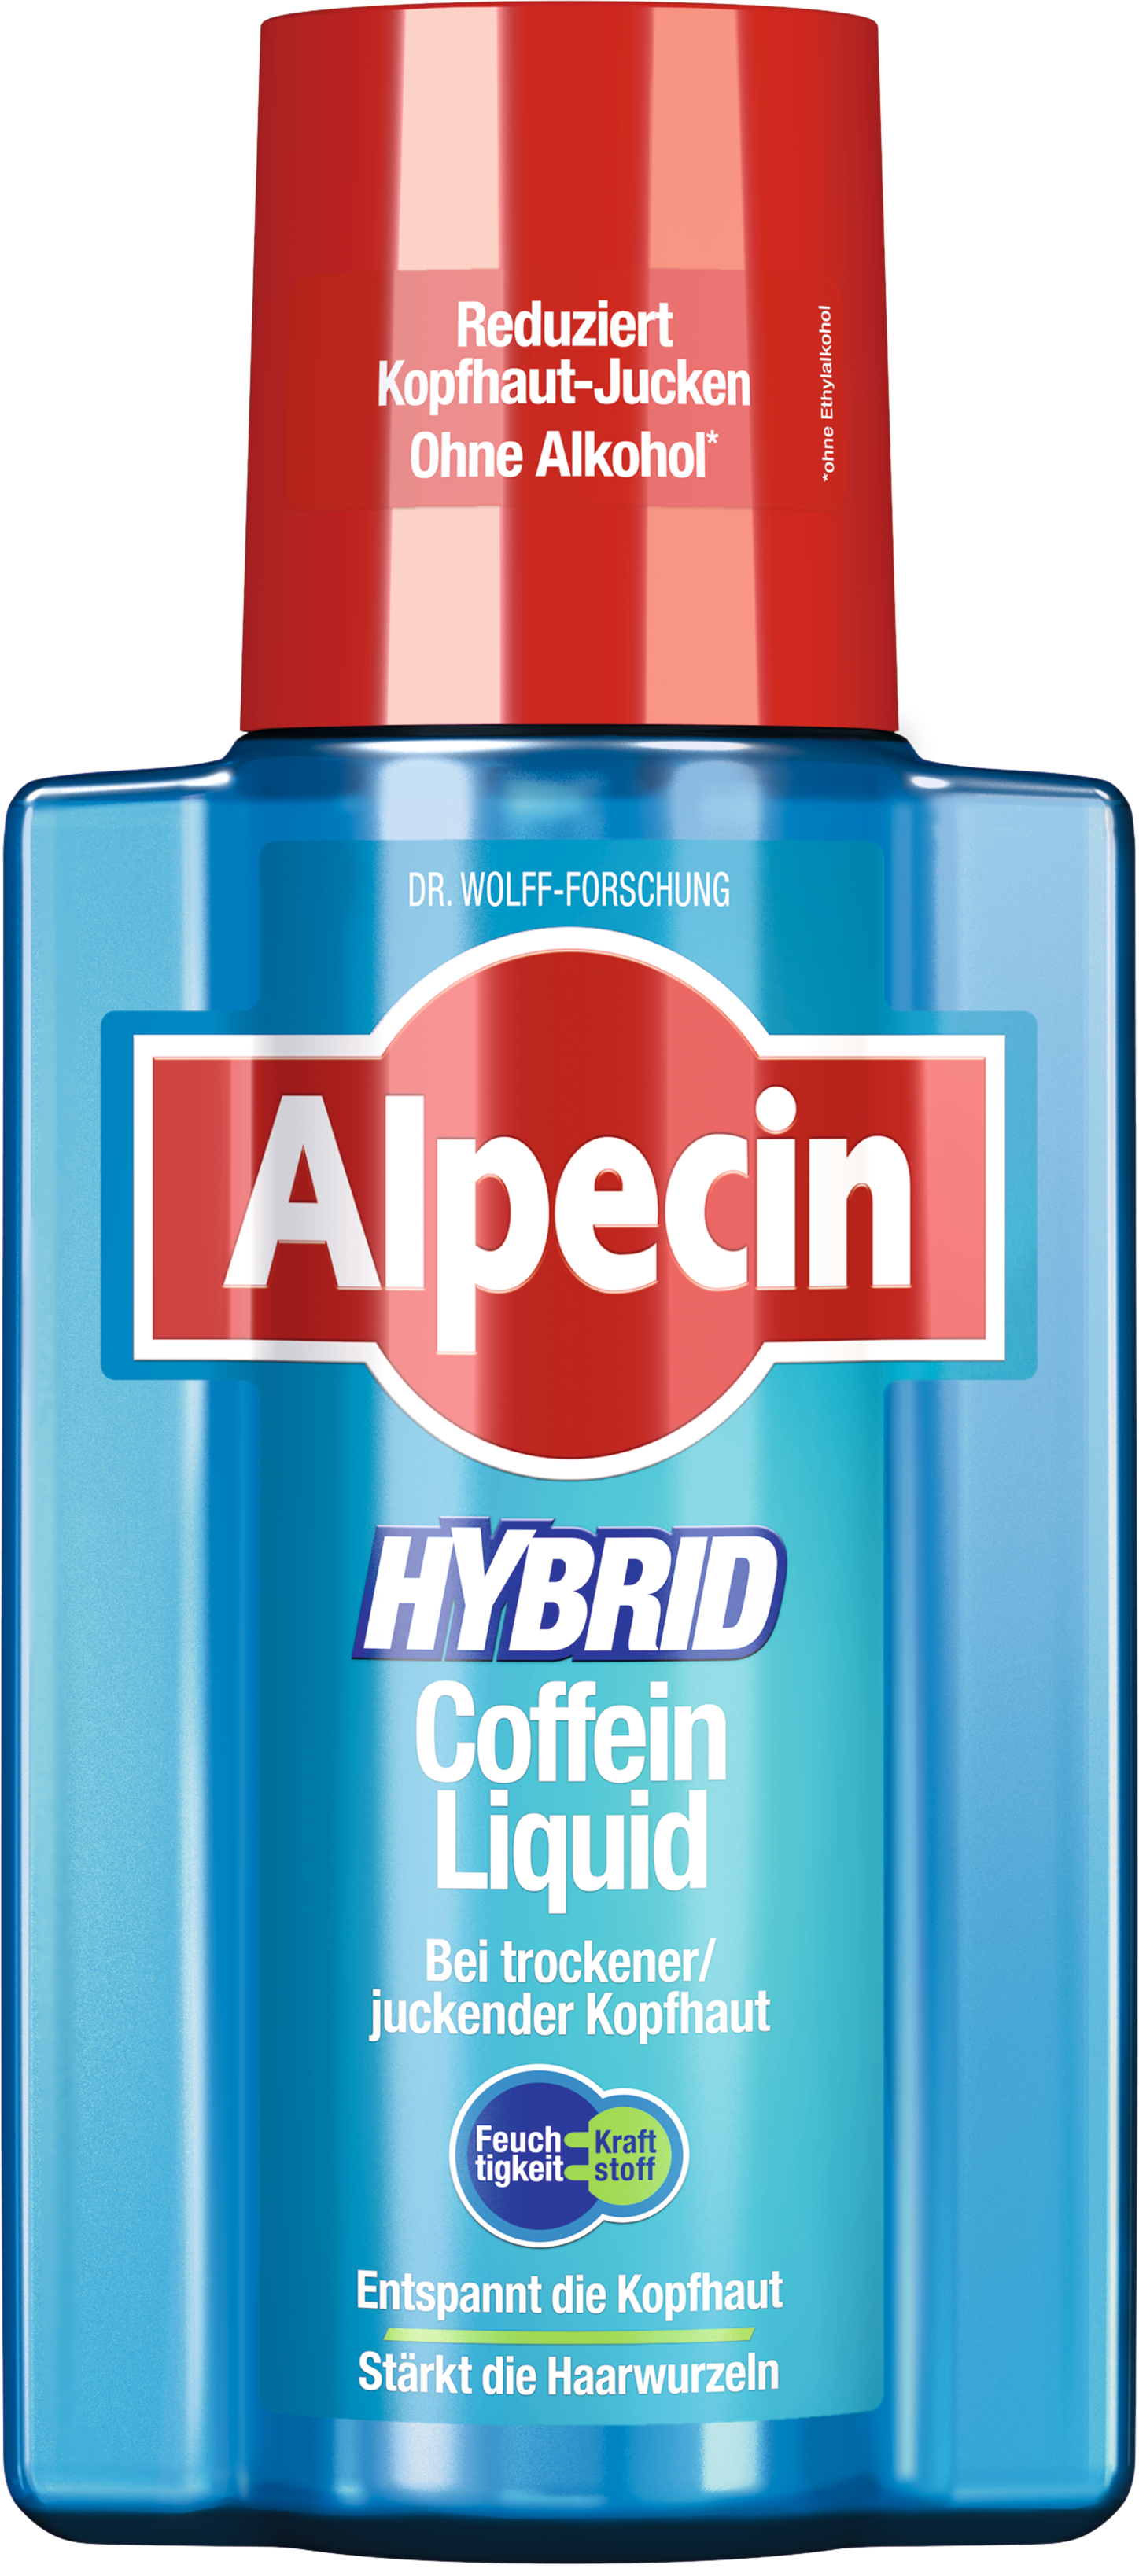 Alpecin Hybrid Coffein Liquid